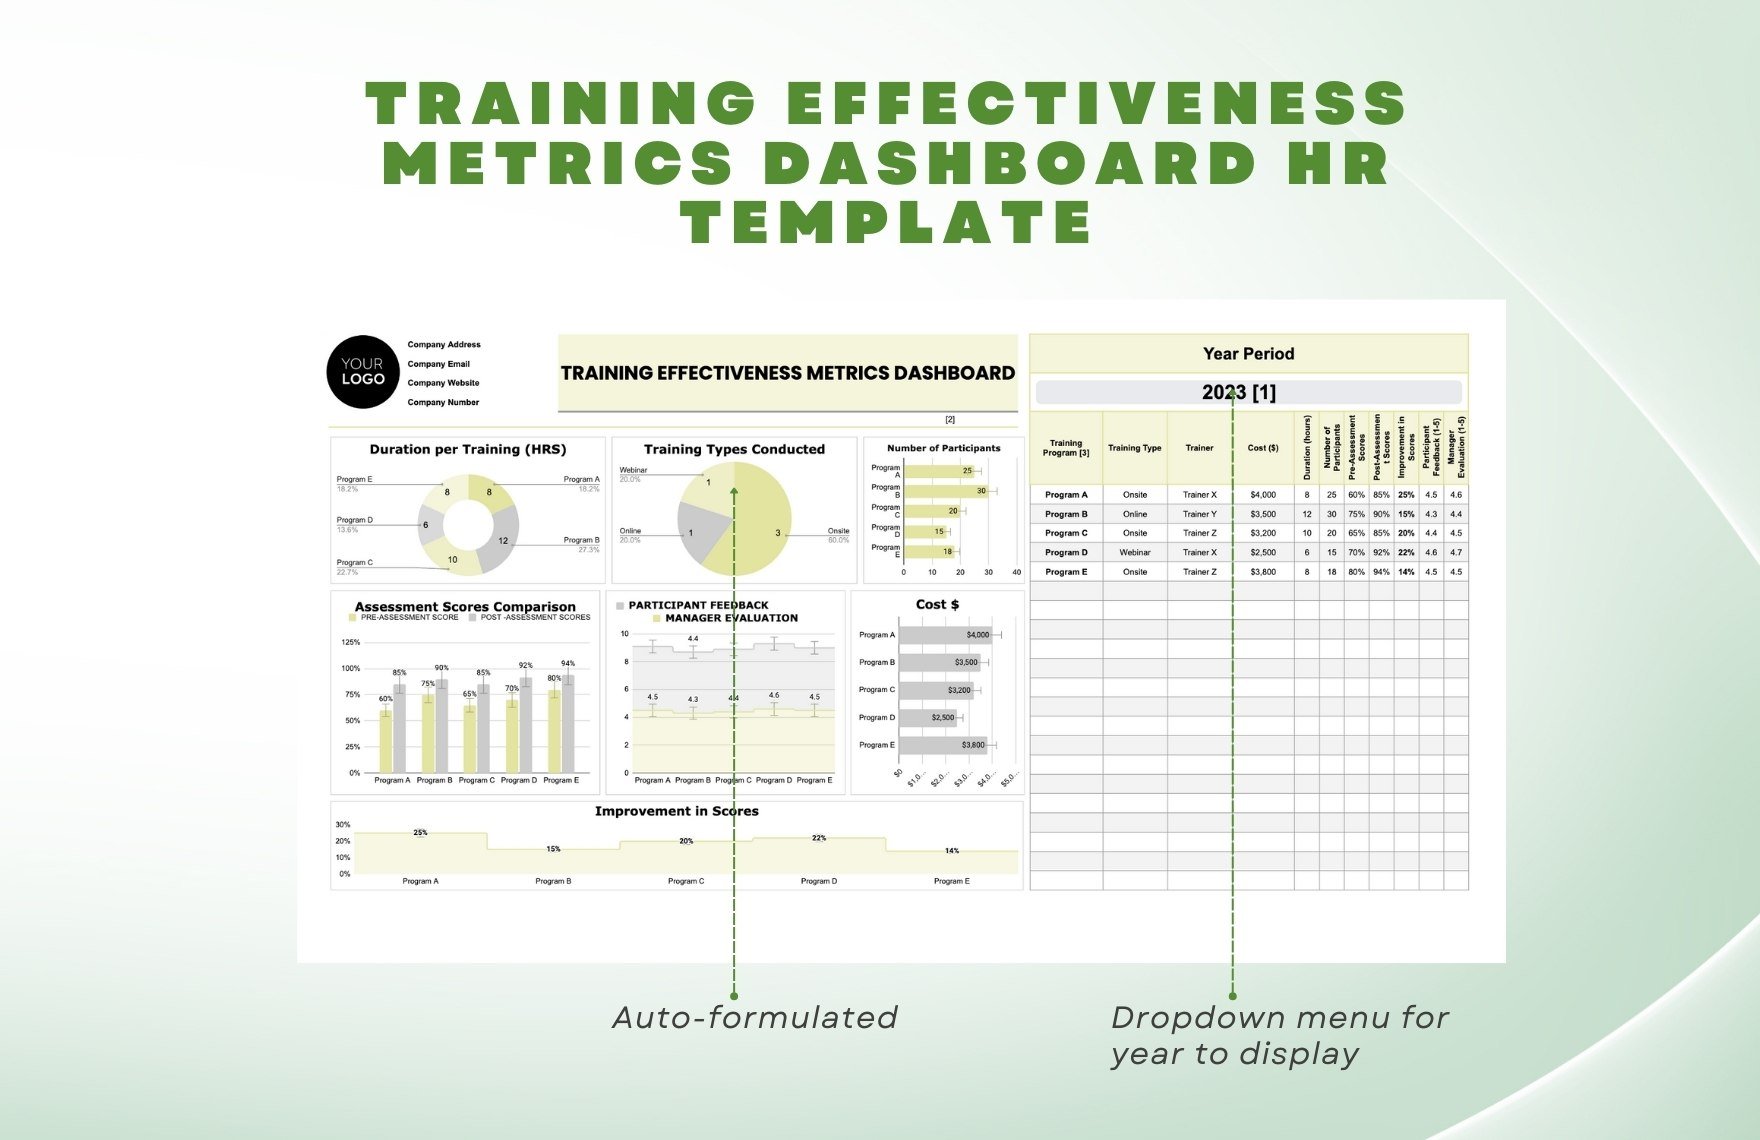 Training Effectiveness Metrics Dashboard HR Template